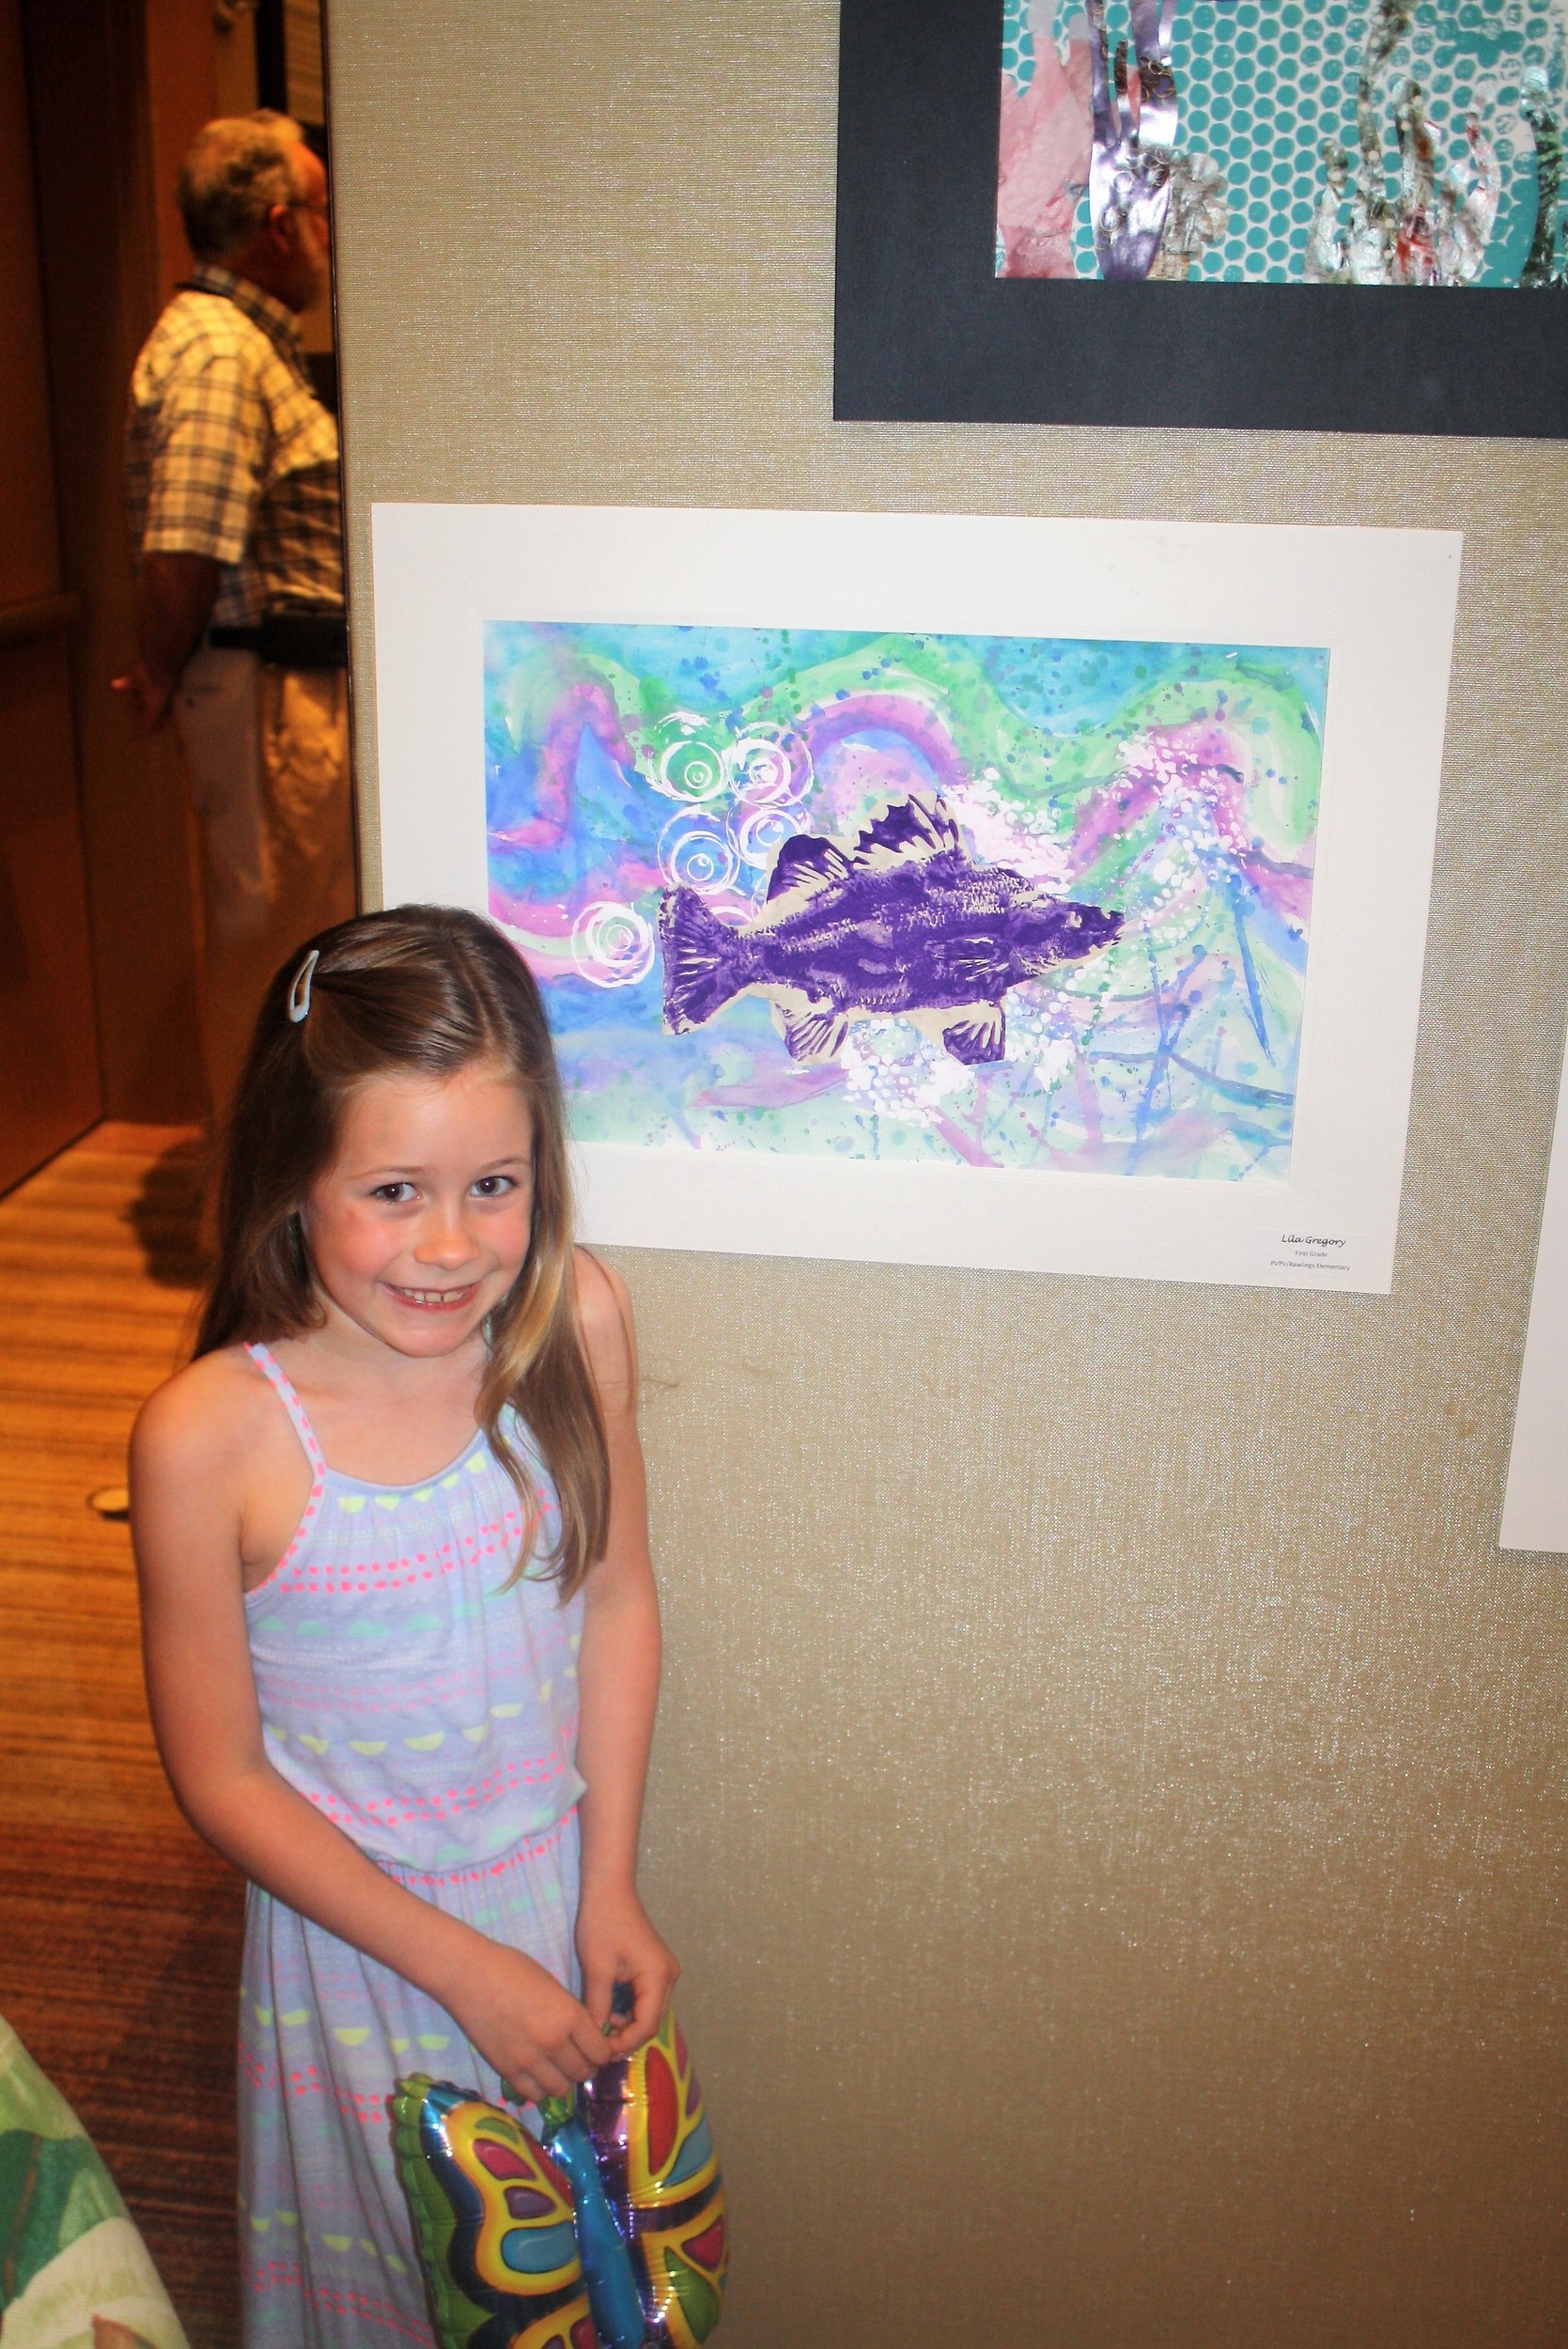 Lila Gregory, 7, displays her artwork